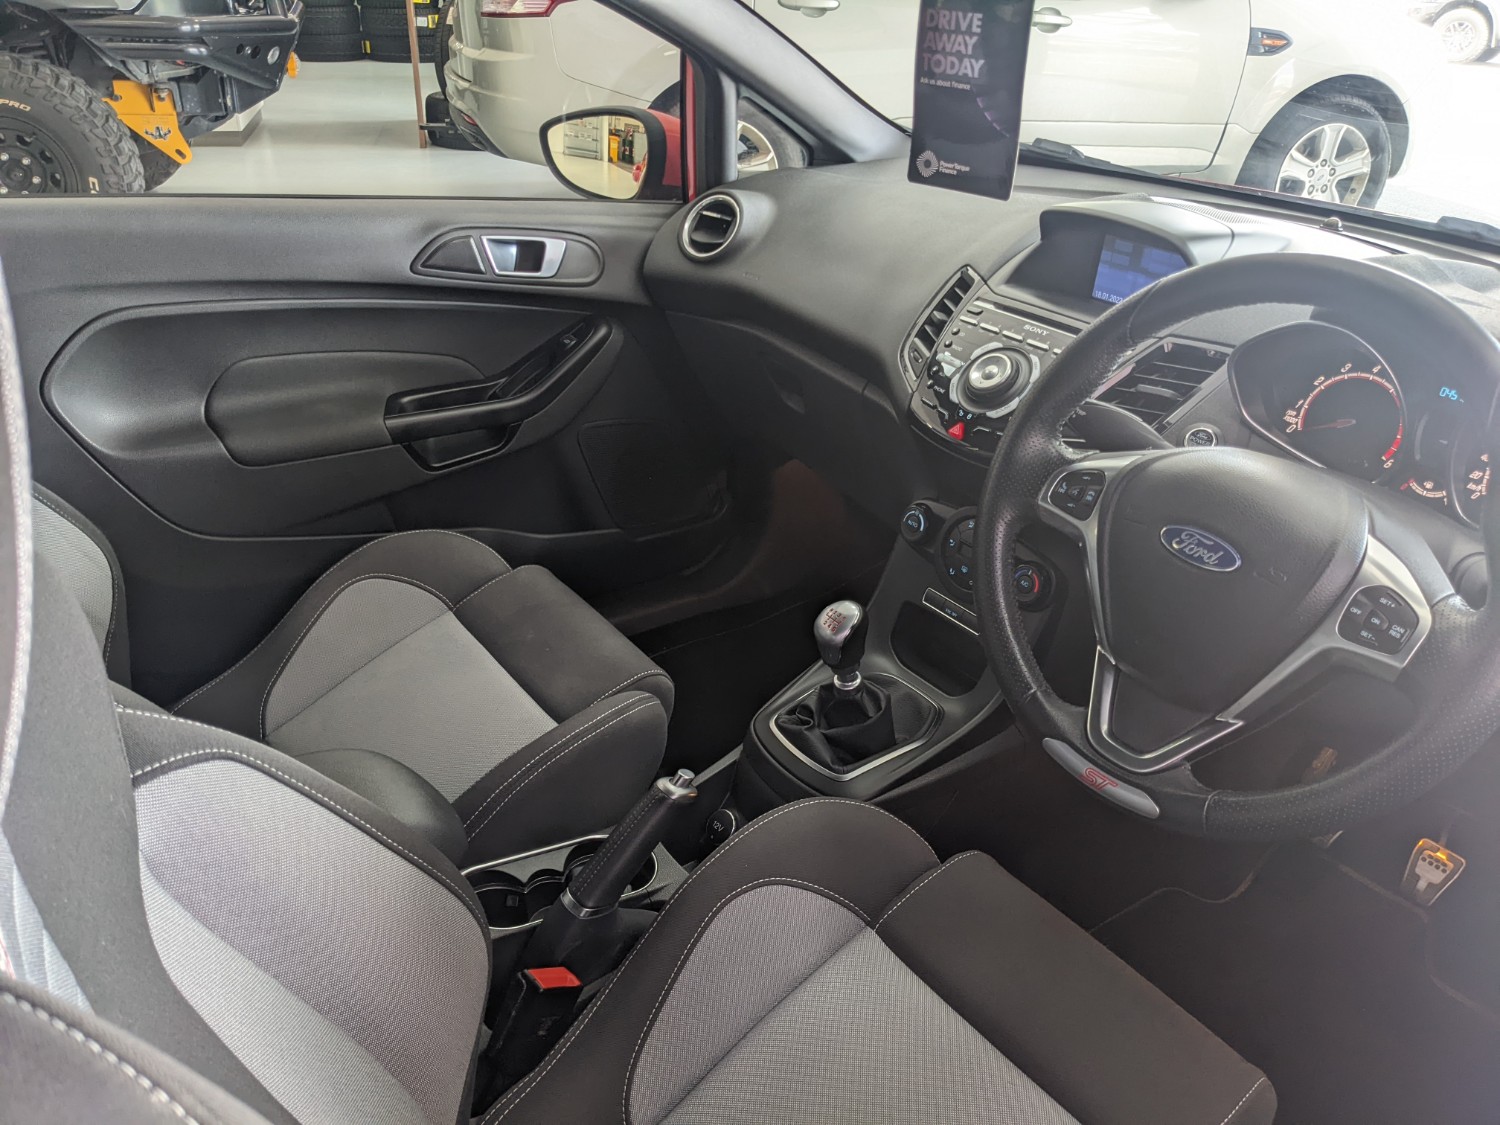 2017 Ford Fiesta WZ ST Hatch Image 12